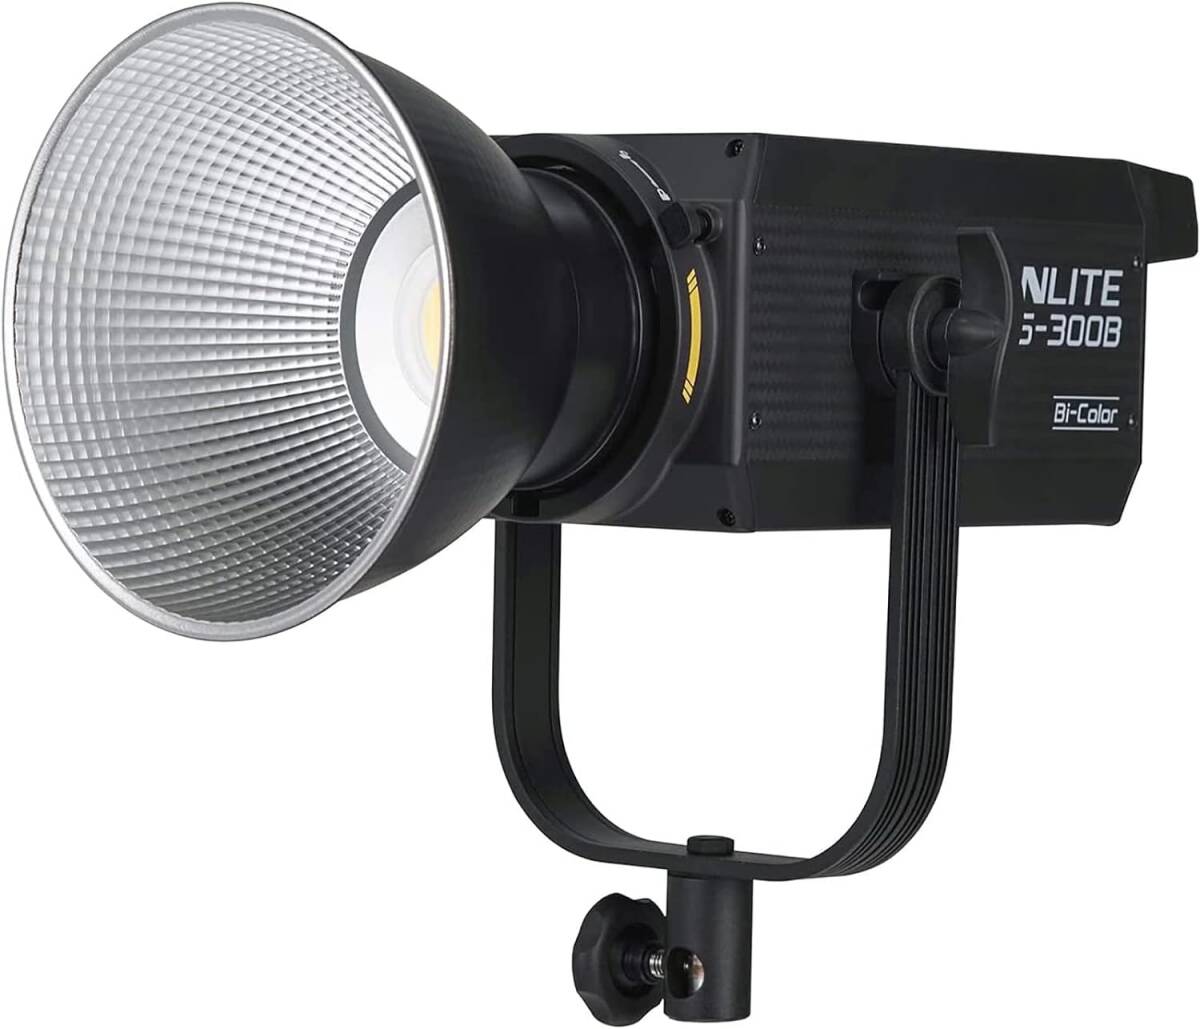 NANLITE FS-300B 撮影用ライト 高出力350W バイカラー LED 定常光 12種類照明効果 過熱保護 静音